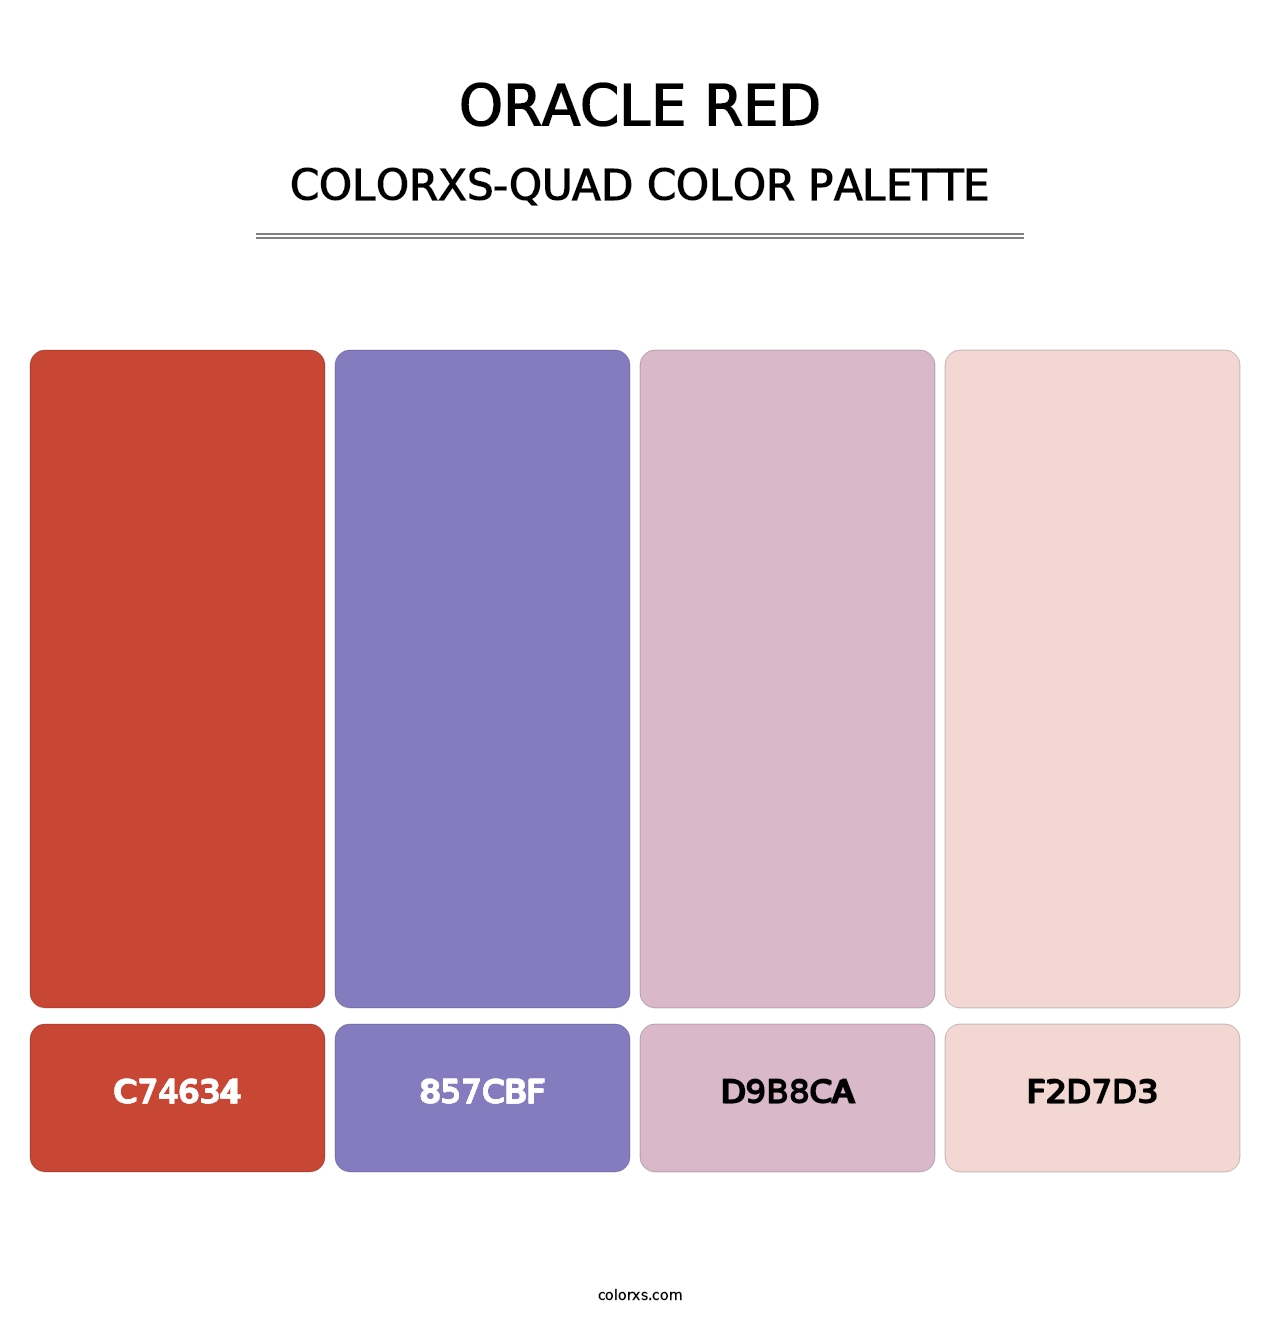 Oracle Red - Colorxs Quad Palette